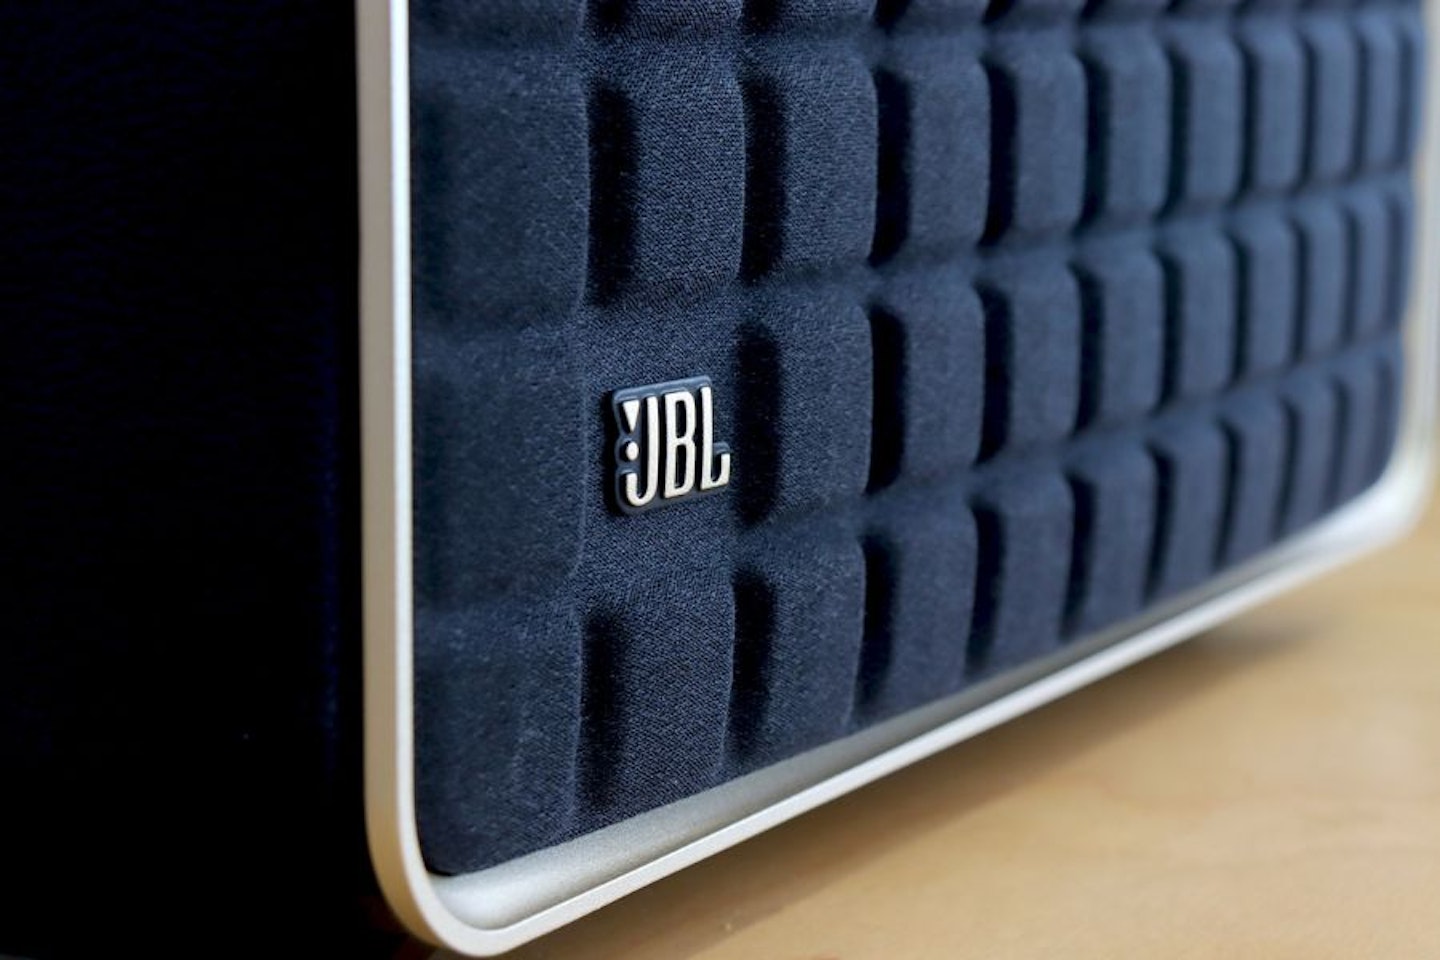 JBL Authentics 300 smart home speaker - JBL logo